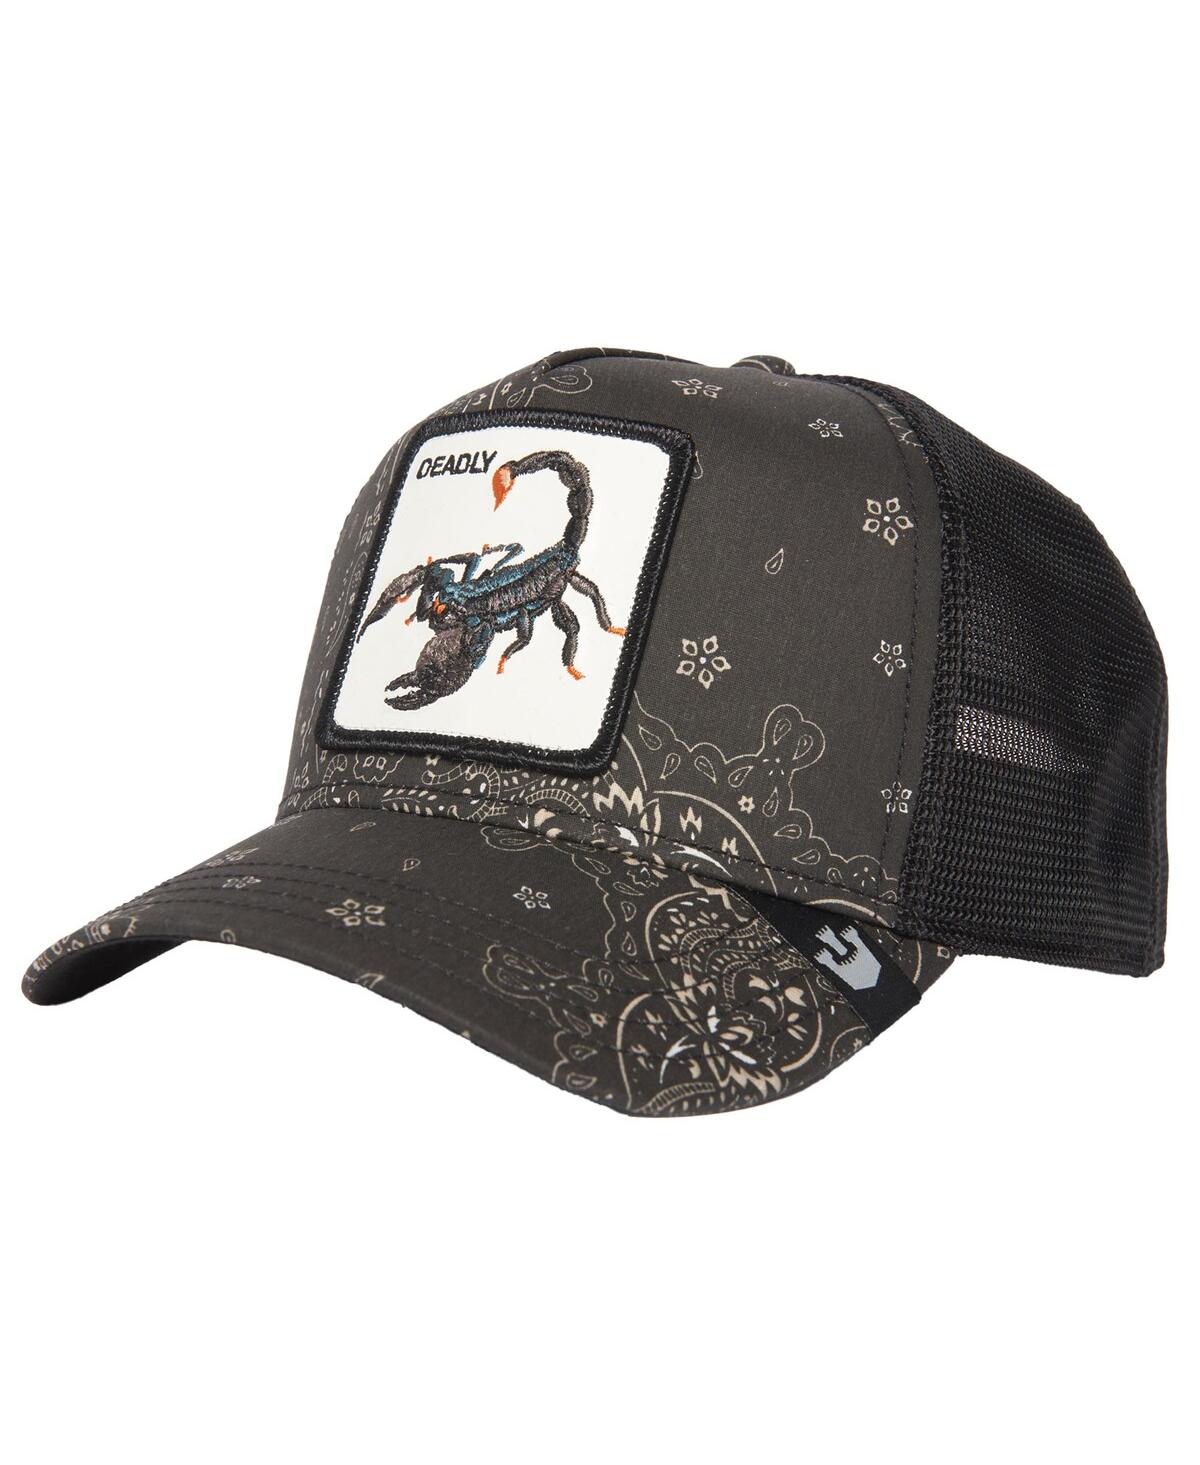 . Goorin Bros Men's Black Diamond Pearls Trucker Adjustable Hat - Black